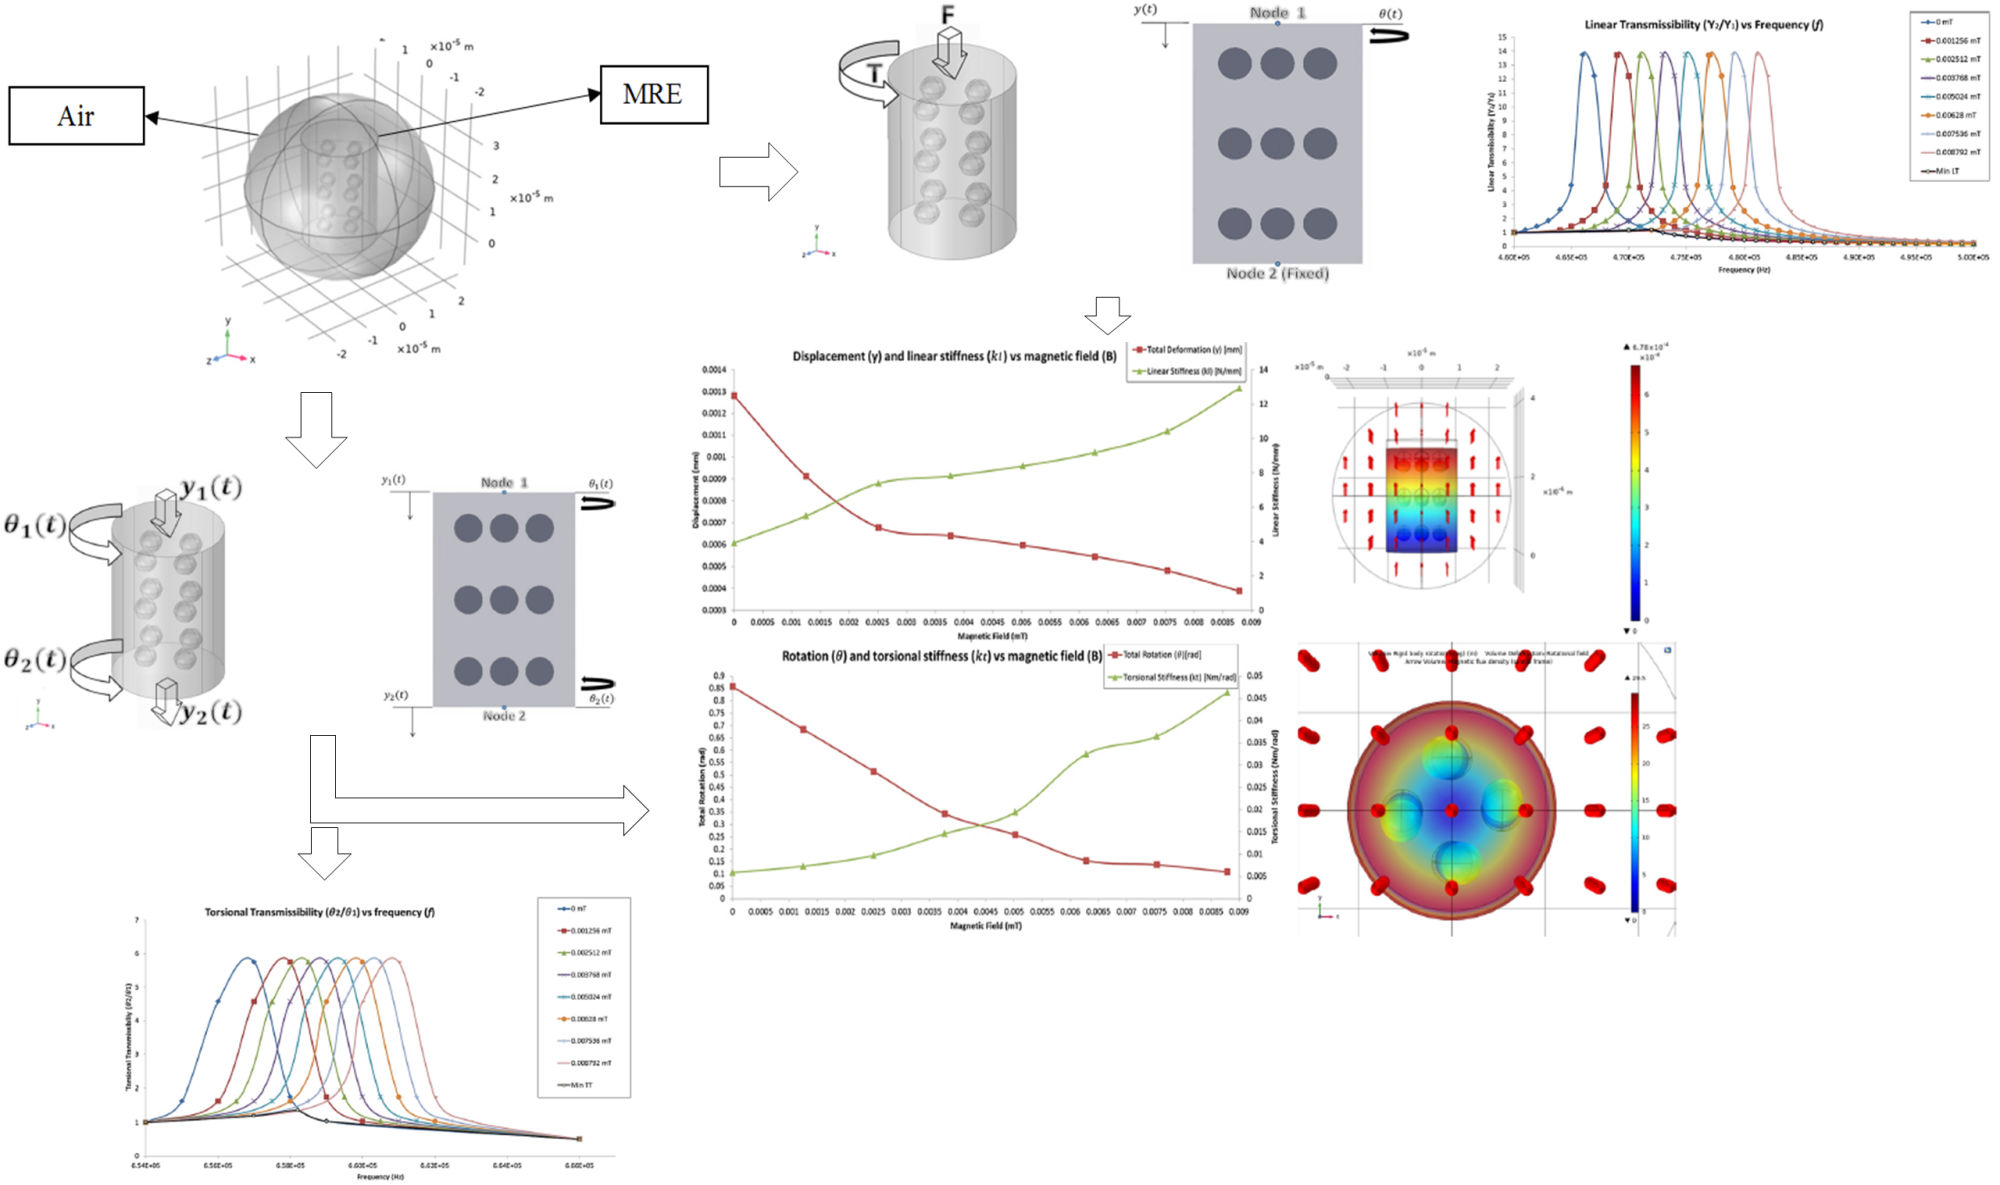 3D numerical modelling and analysis of a magnetorheological elastomer (MRE)